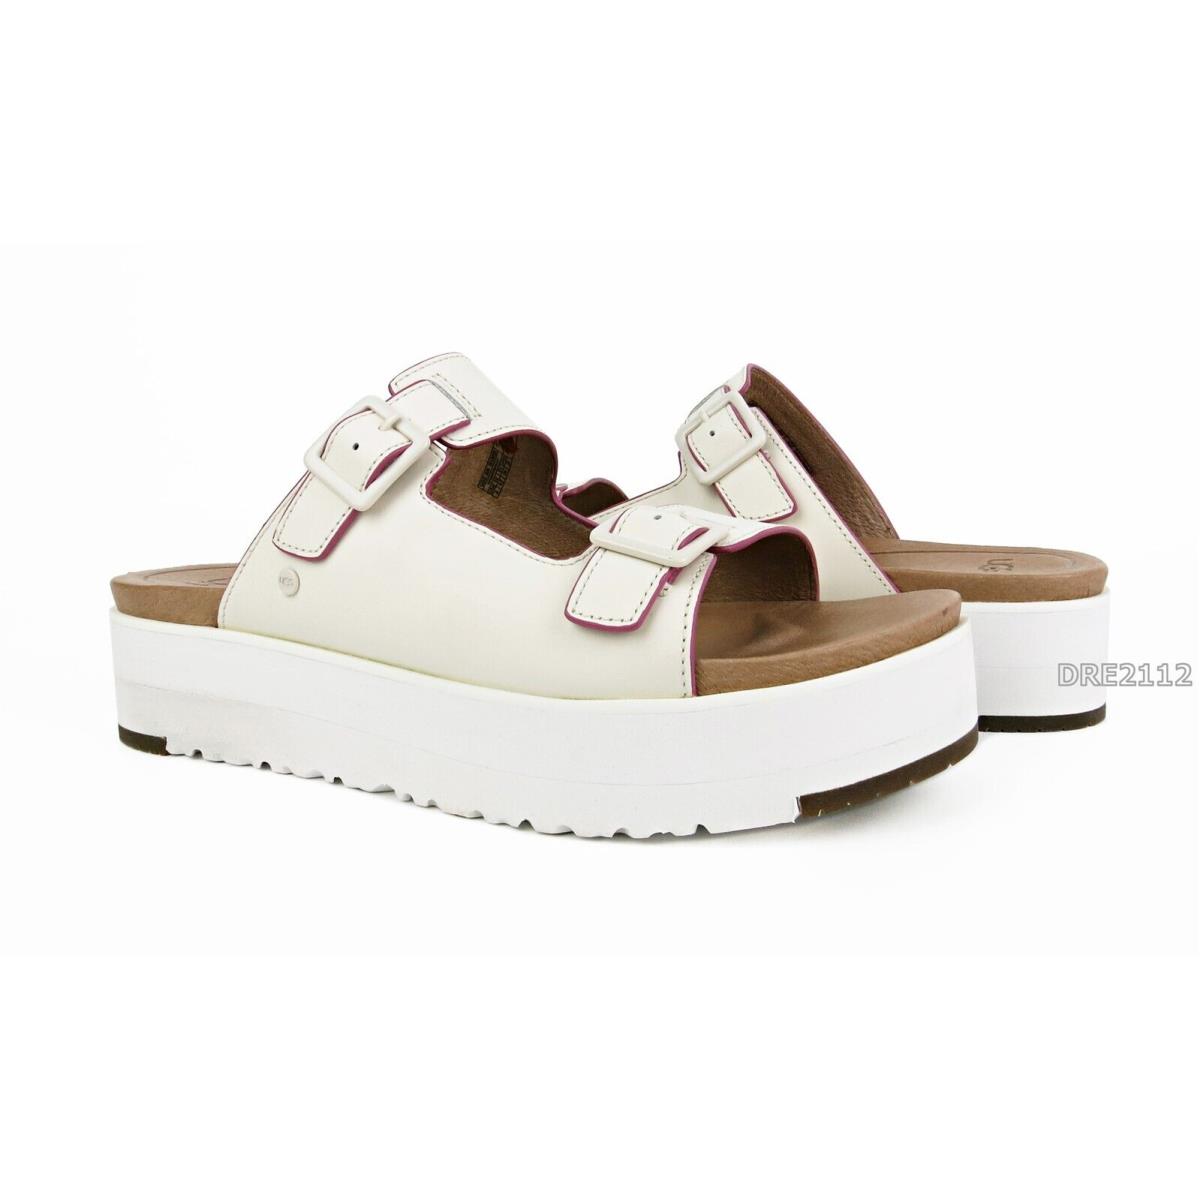 Ugg Hanneli White Leather Sandals Womens Size 7.5 -nib